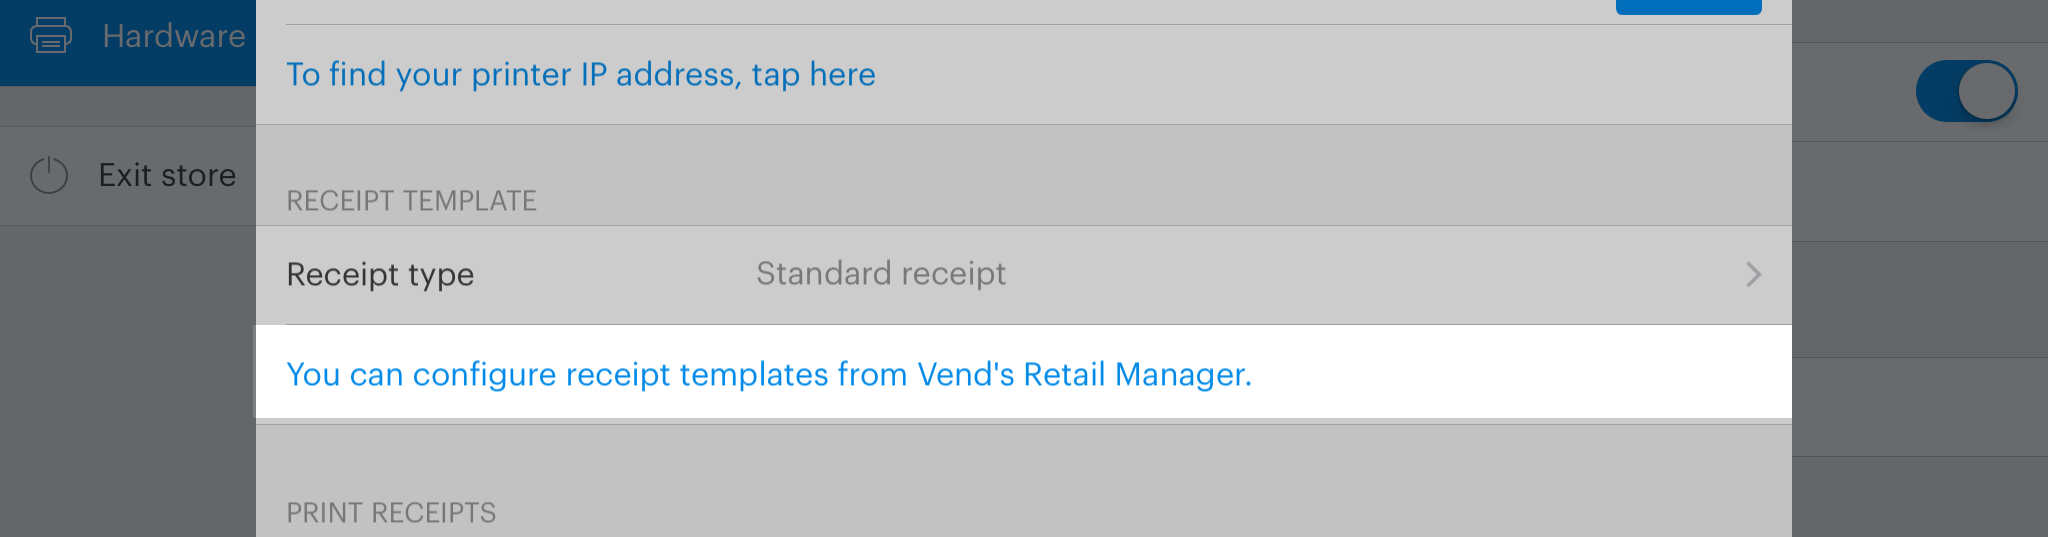 receipt-templates-for-the-vend-register-ipad-app